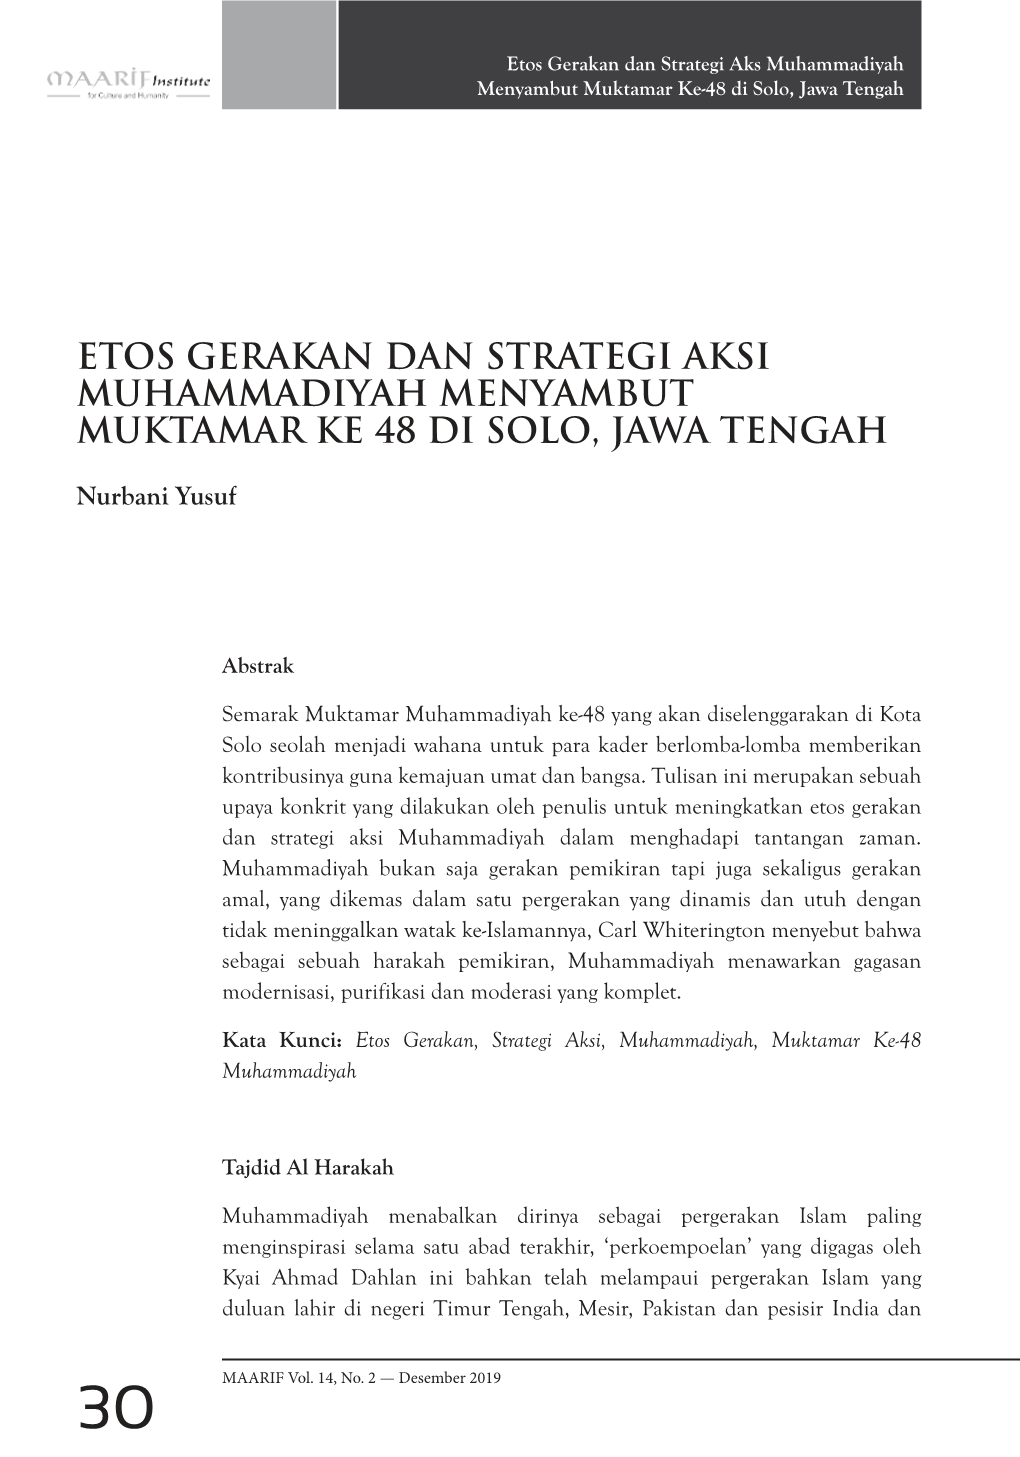 Etos Gerakan Dan Strategi Aksi Muhammadiyah Menyambut Muktamar Ke 48 Di Solo, Jawa Tengah